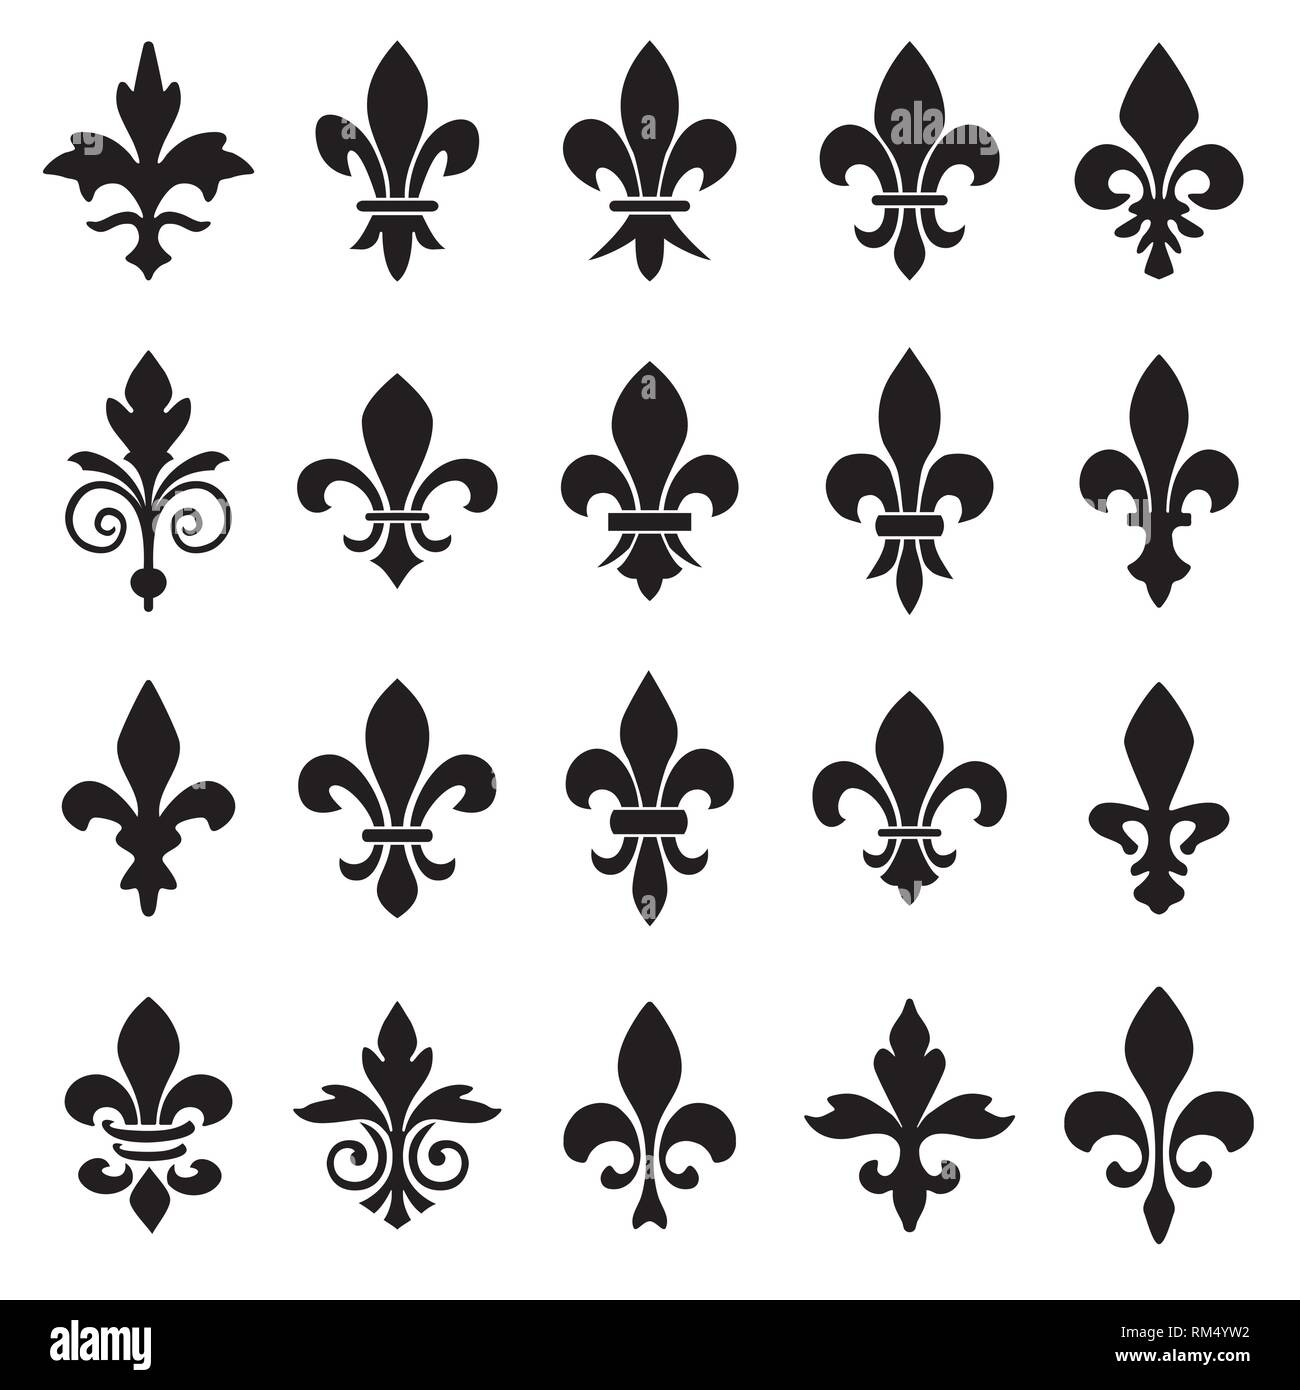 Einstellen der Embleme Fleur de Lys Symbole Stock-Vektorgrafik - Alamy